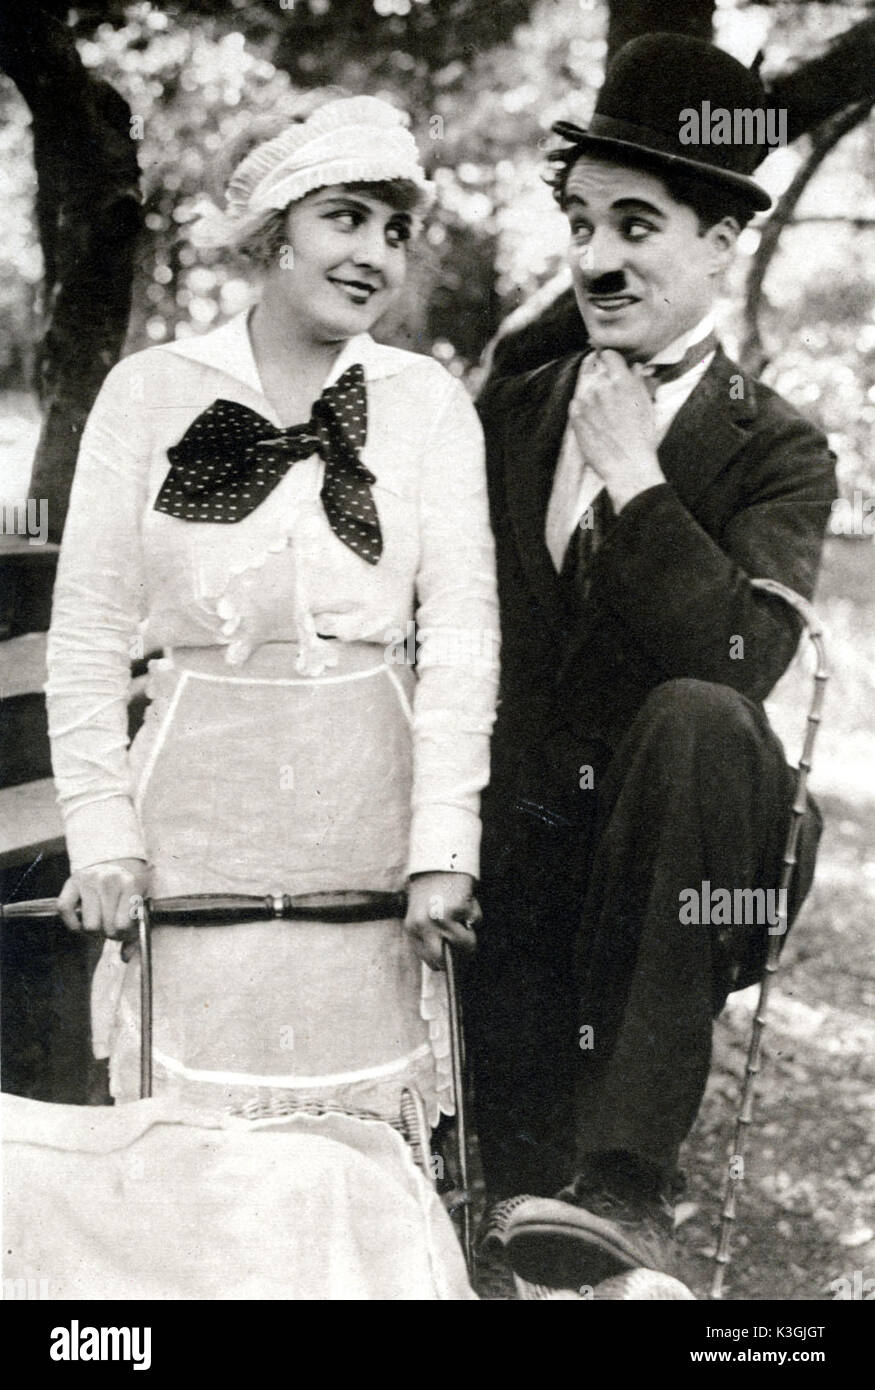 Nel parco charlie chaplin data: 1915 Foto Stock